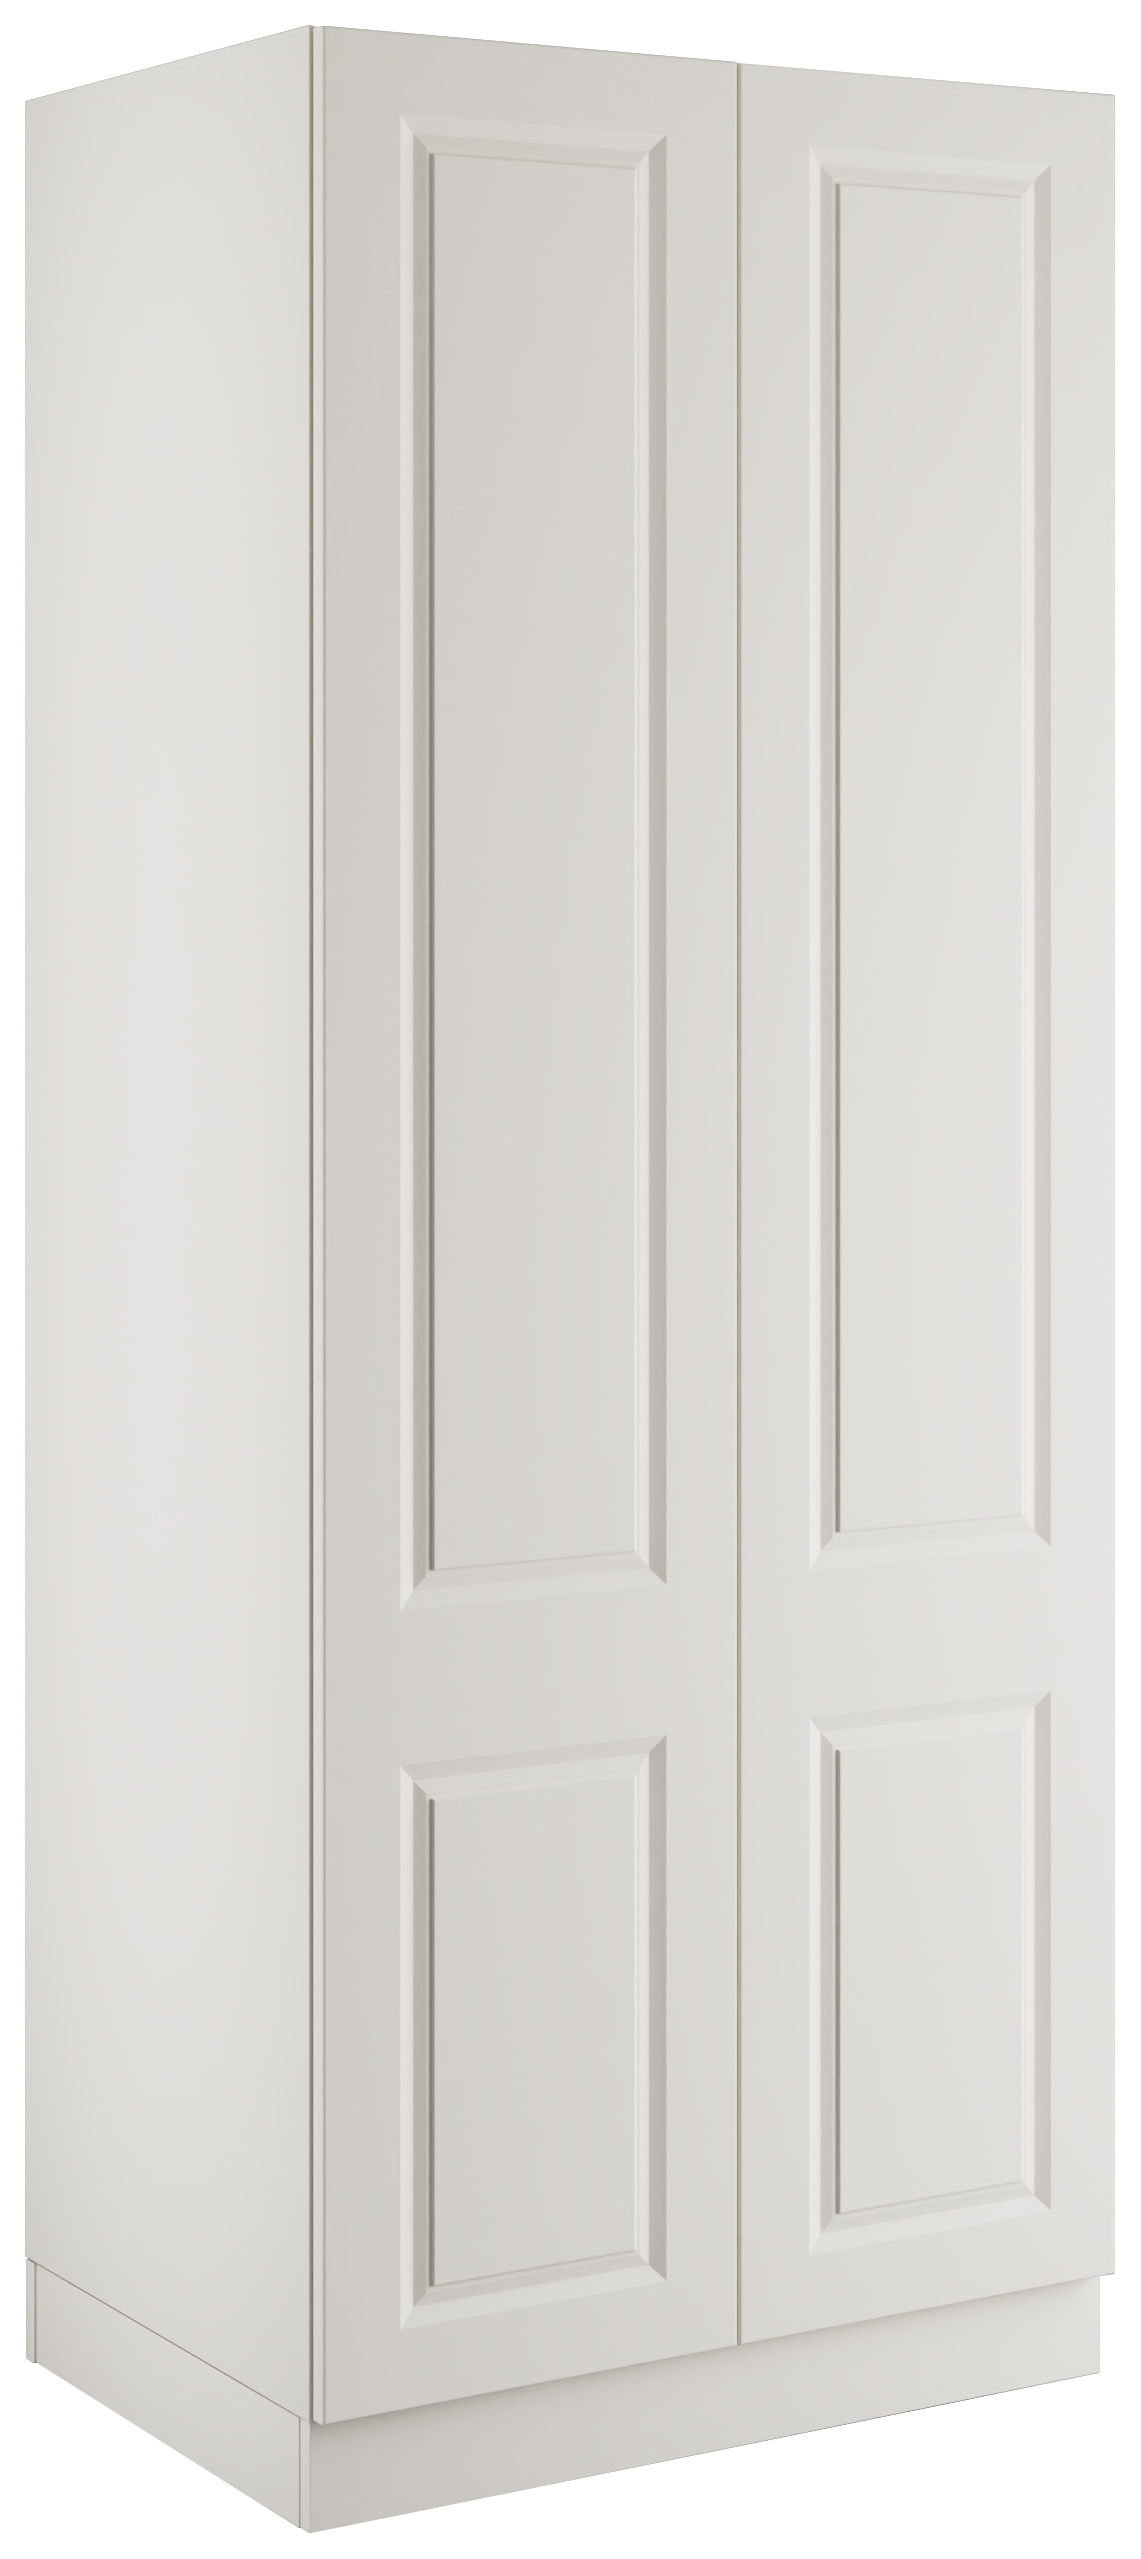 Harrogate White Double Wardrobe with Shelves - 900 x 2260 x 608mm